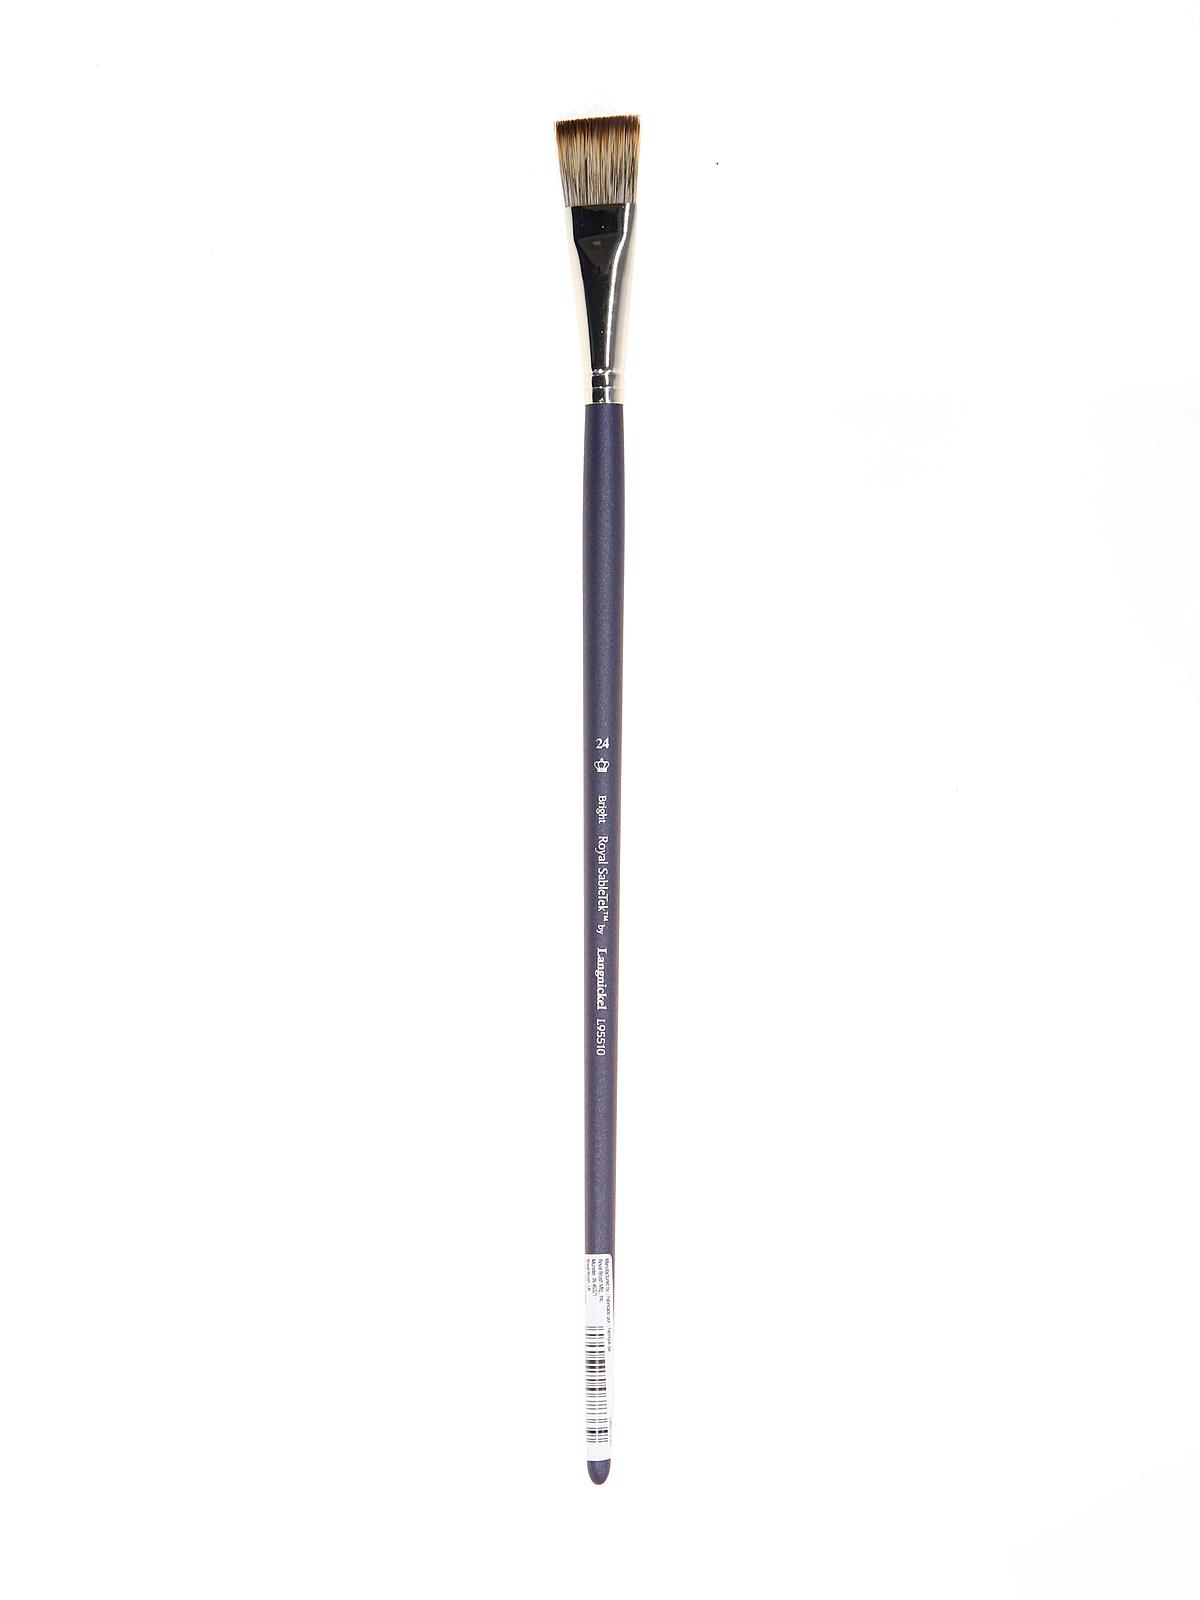 Sabletek Brushes Long Handle 24 Bright L95510